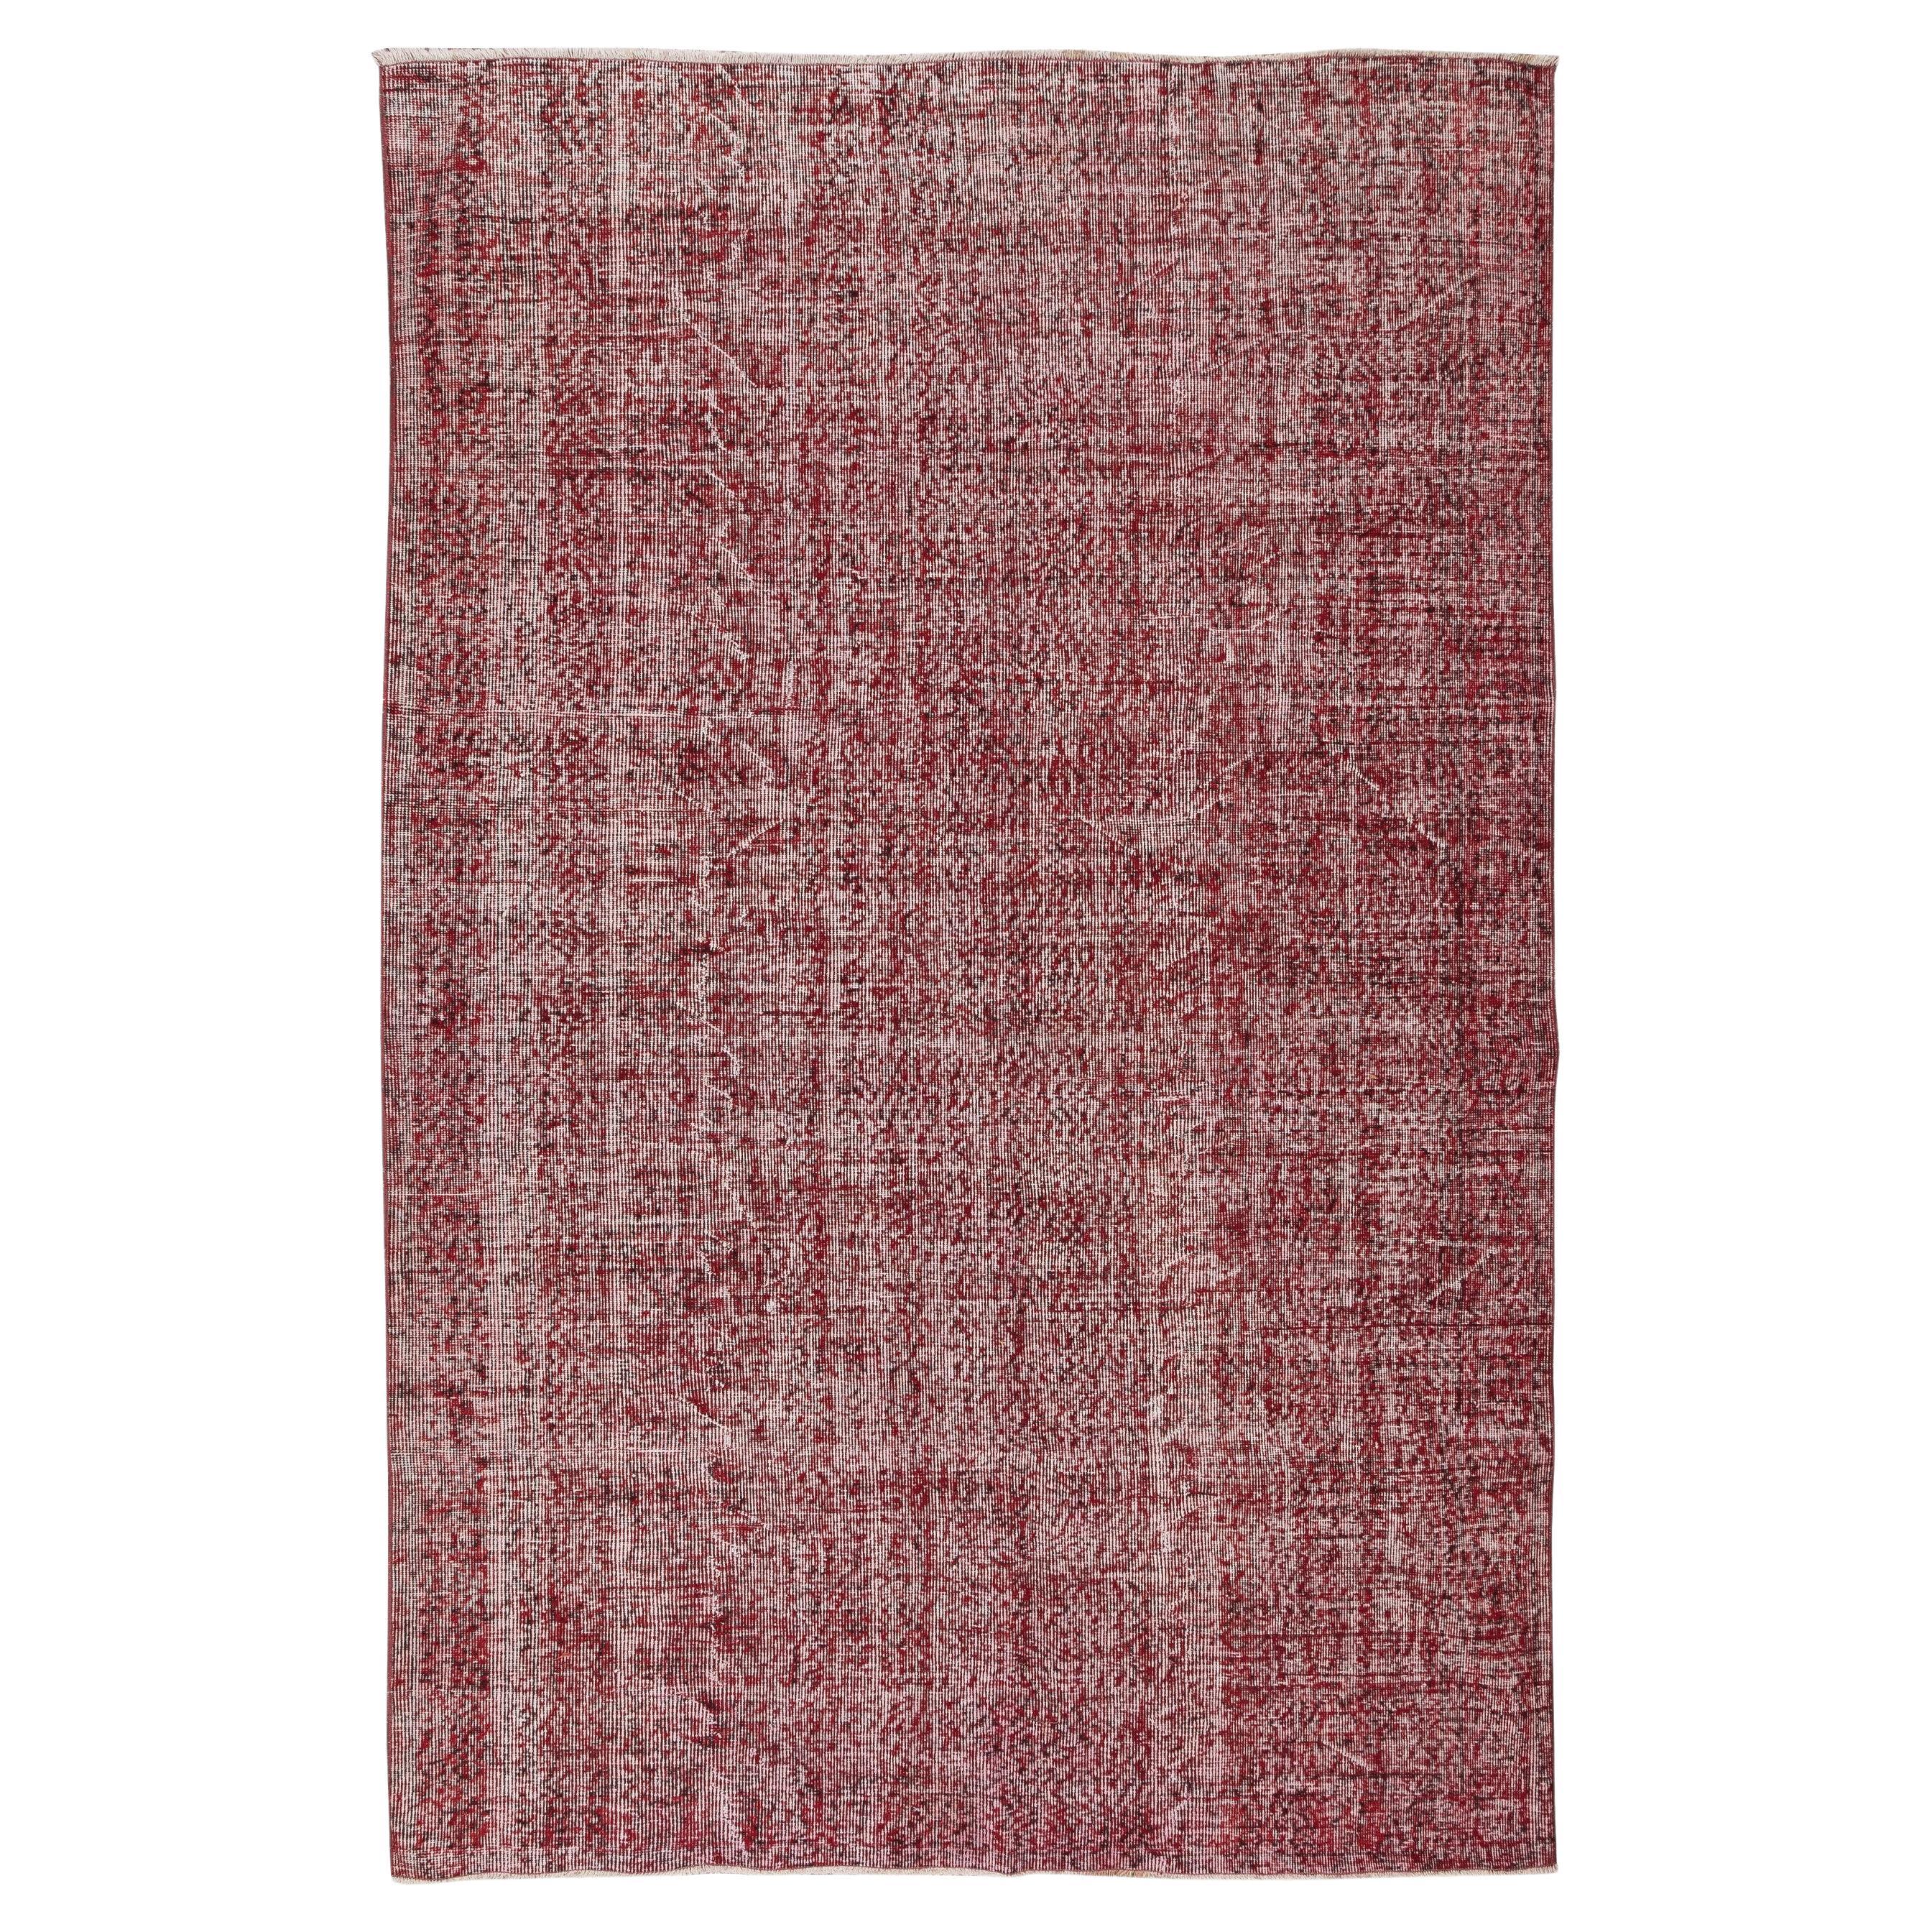 6.4x9.6 Ft Handmade Turkish Vintage Distressed Wool Area Rug in Burgundy Red